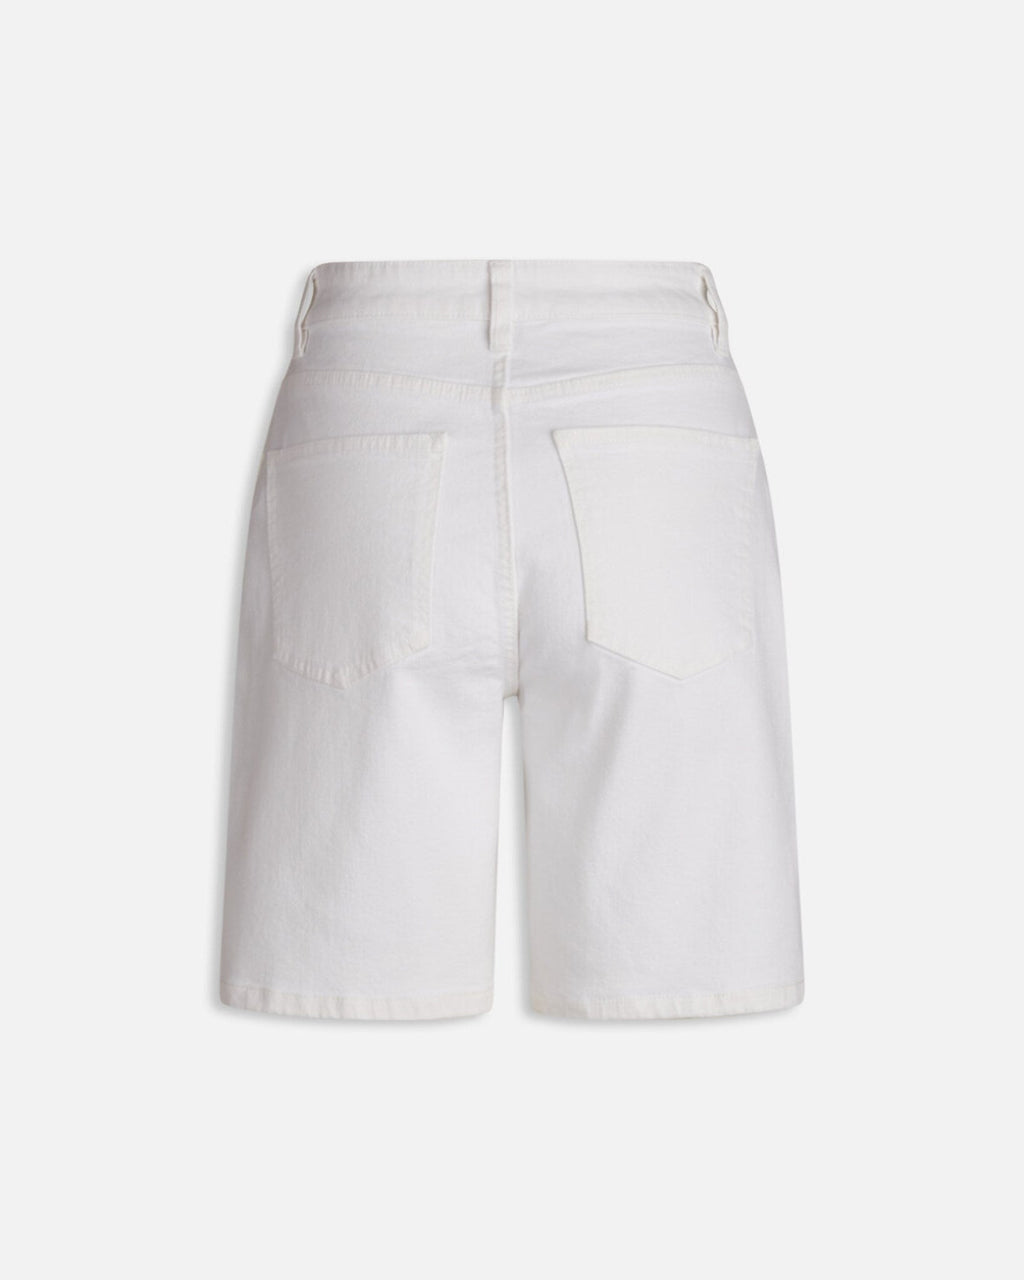 OWI短裤 - 白色